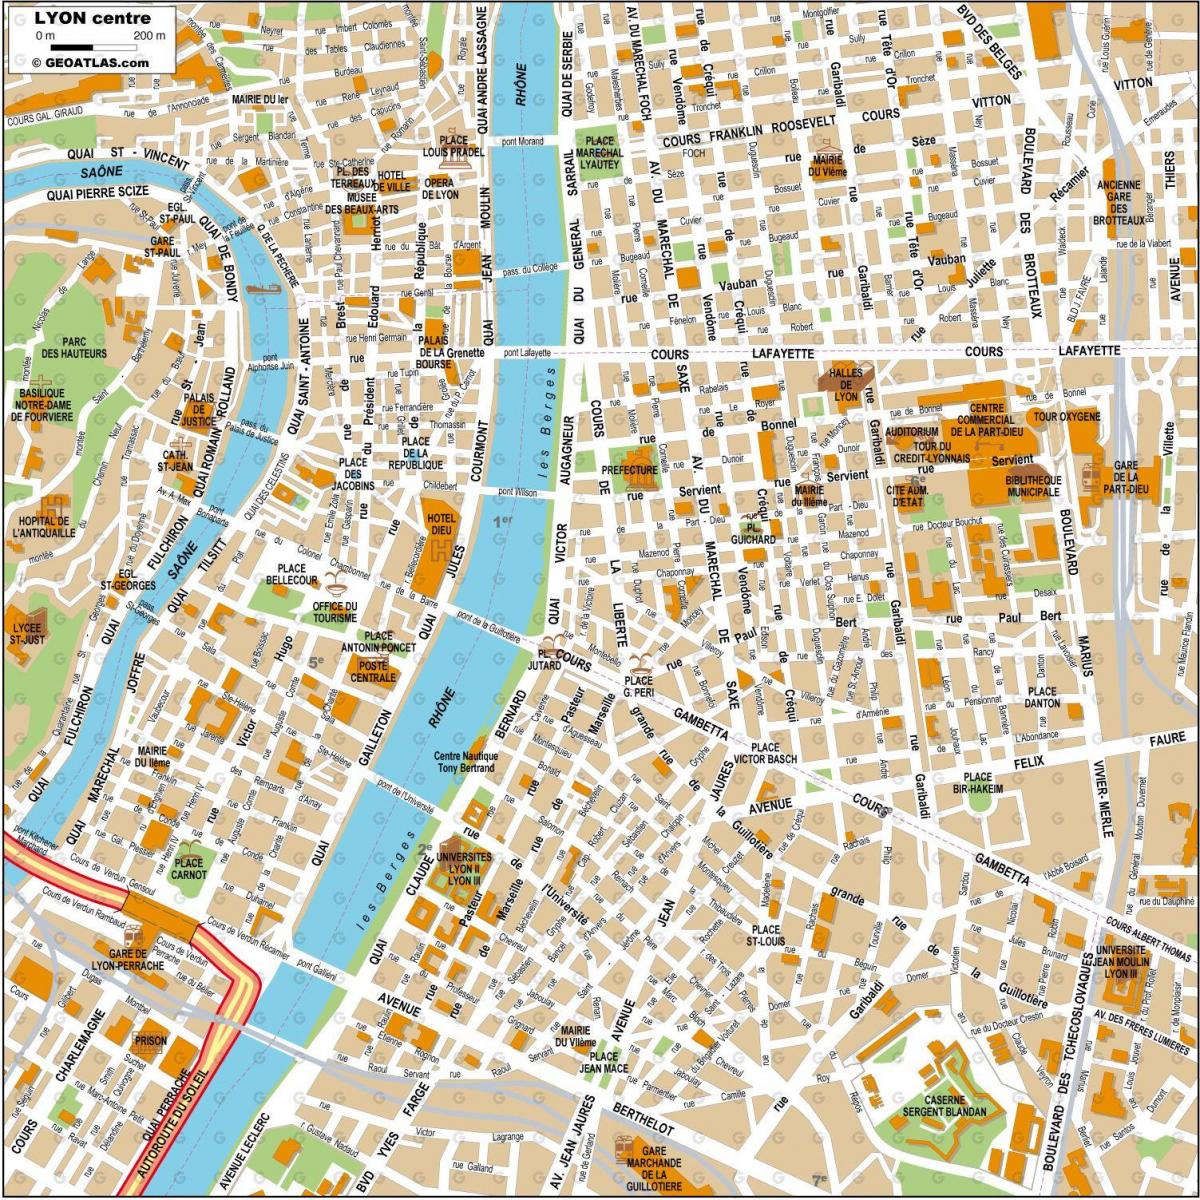 Lyon city center map